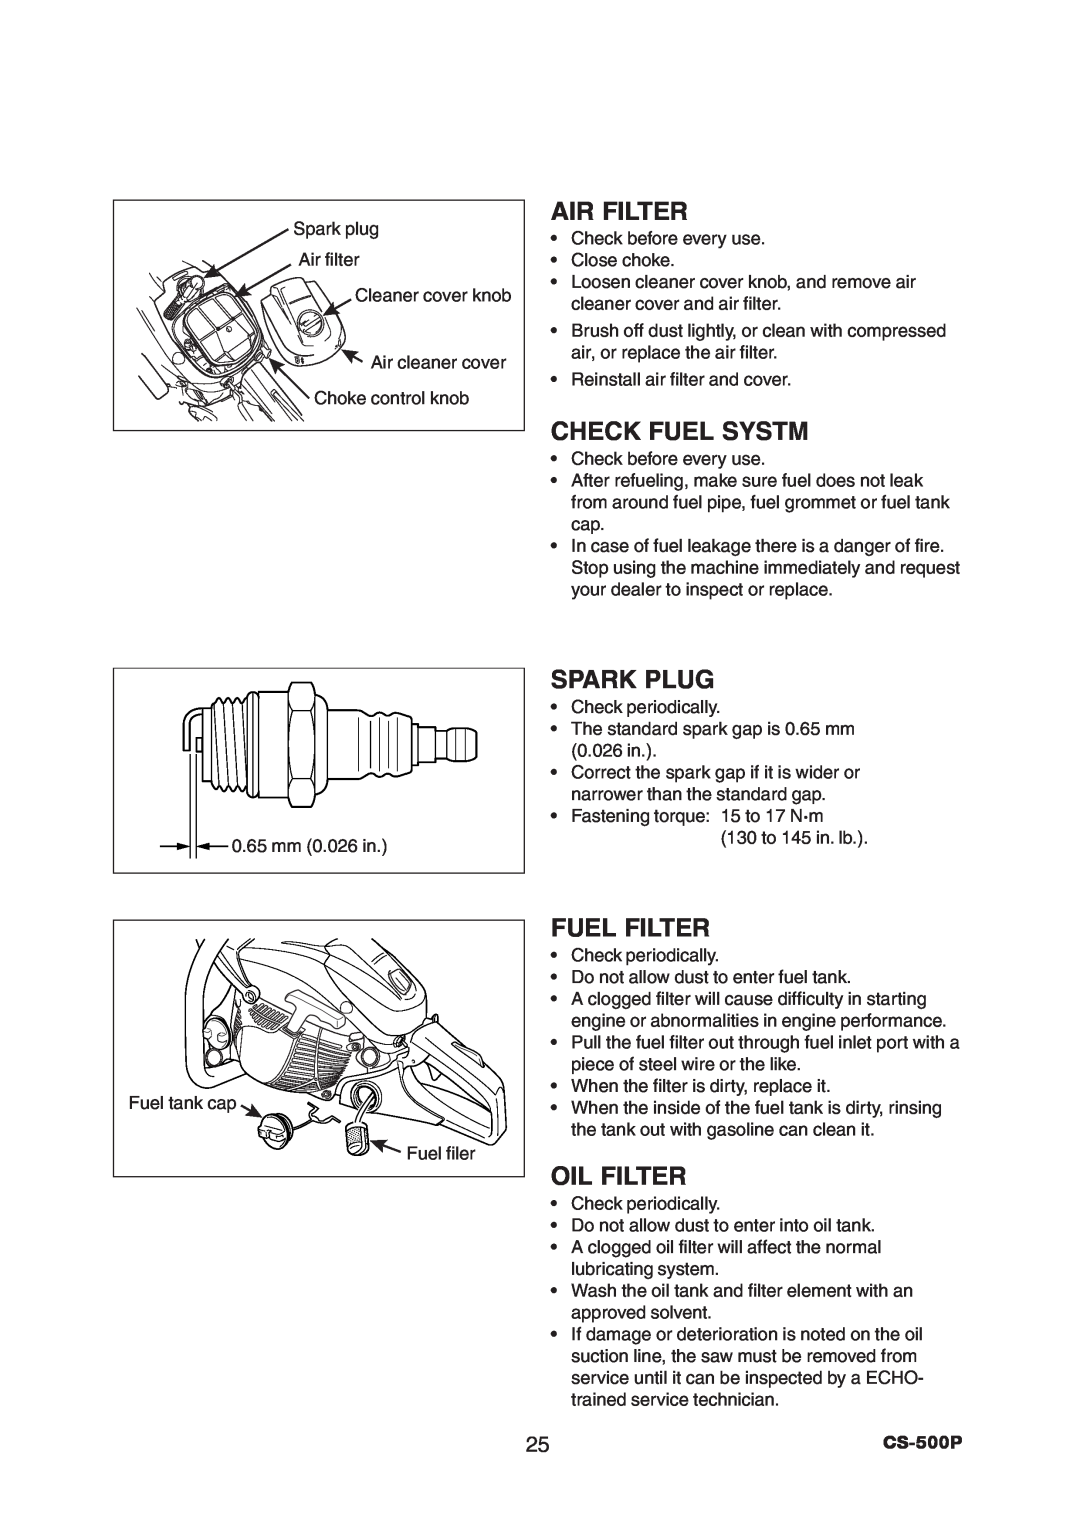 Echo CS-500P instruction manual Air Filter, Check Fuel Systm, Spark Plug, Fuel Filter, Oil Filter 